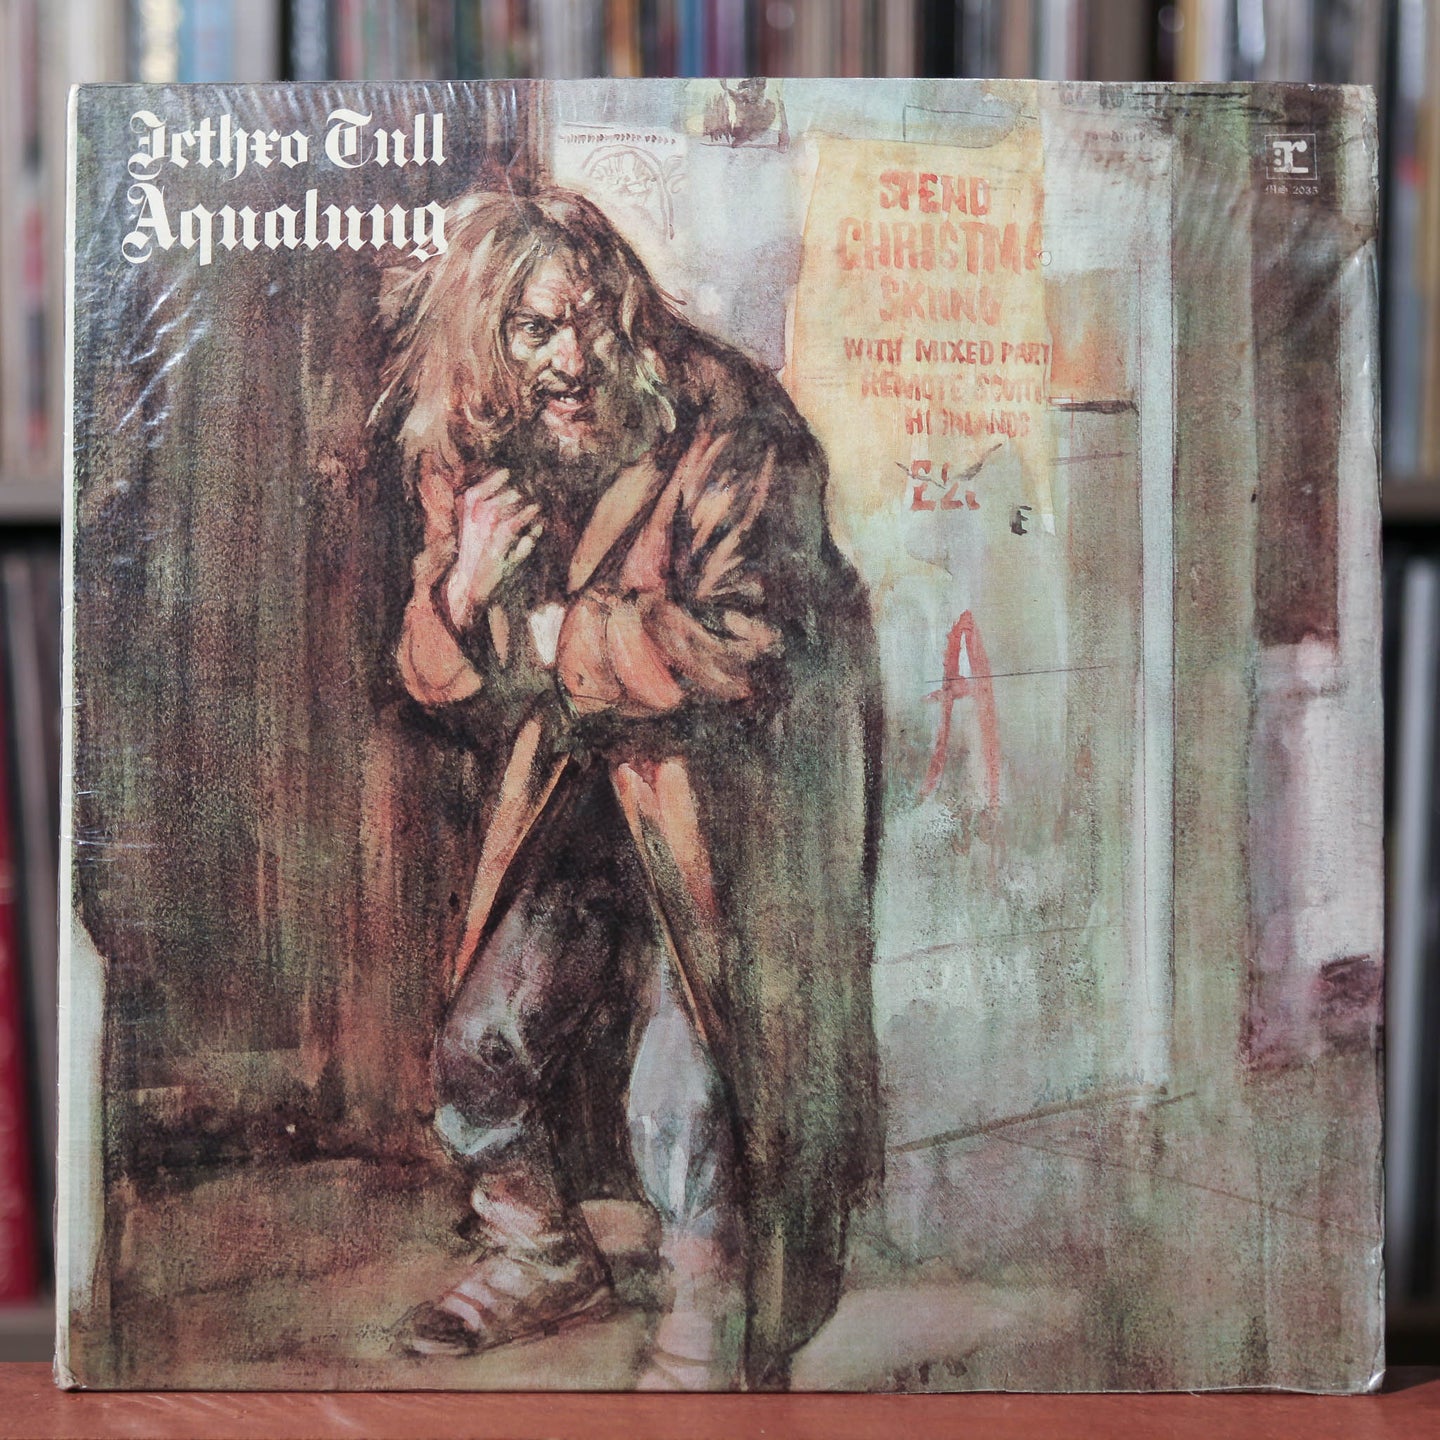 Jethro Tull - Aqualung - 1971 Reprise, VG/VG+ w/Shrink